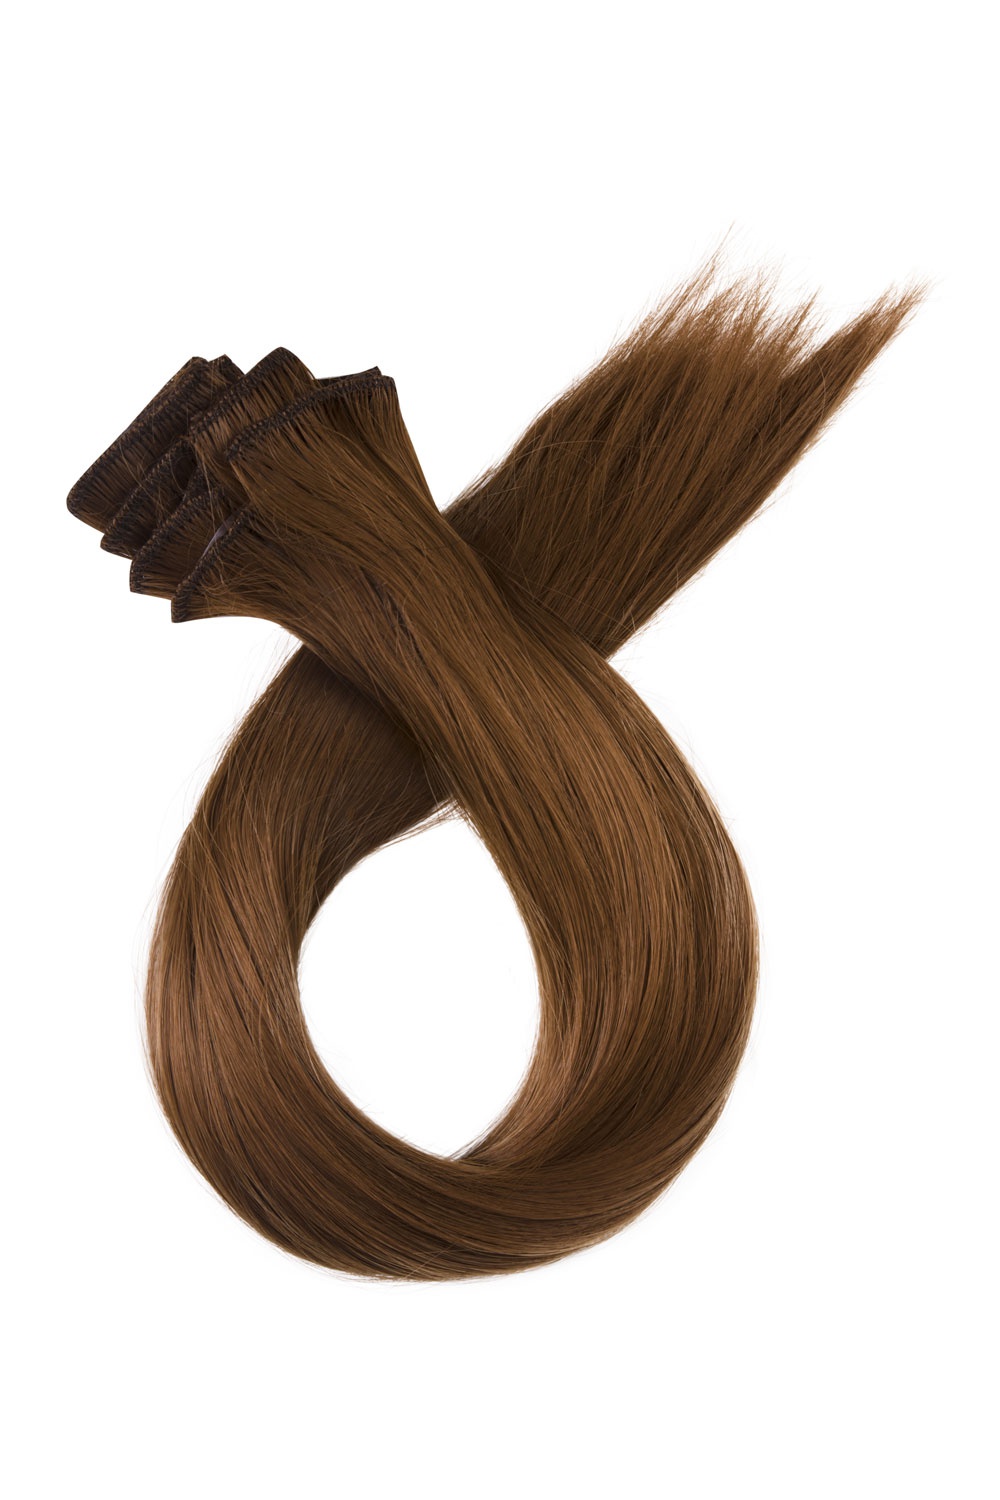 Svetlo hnedé clip in vlasy, 50cm, 115g, farba 12